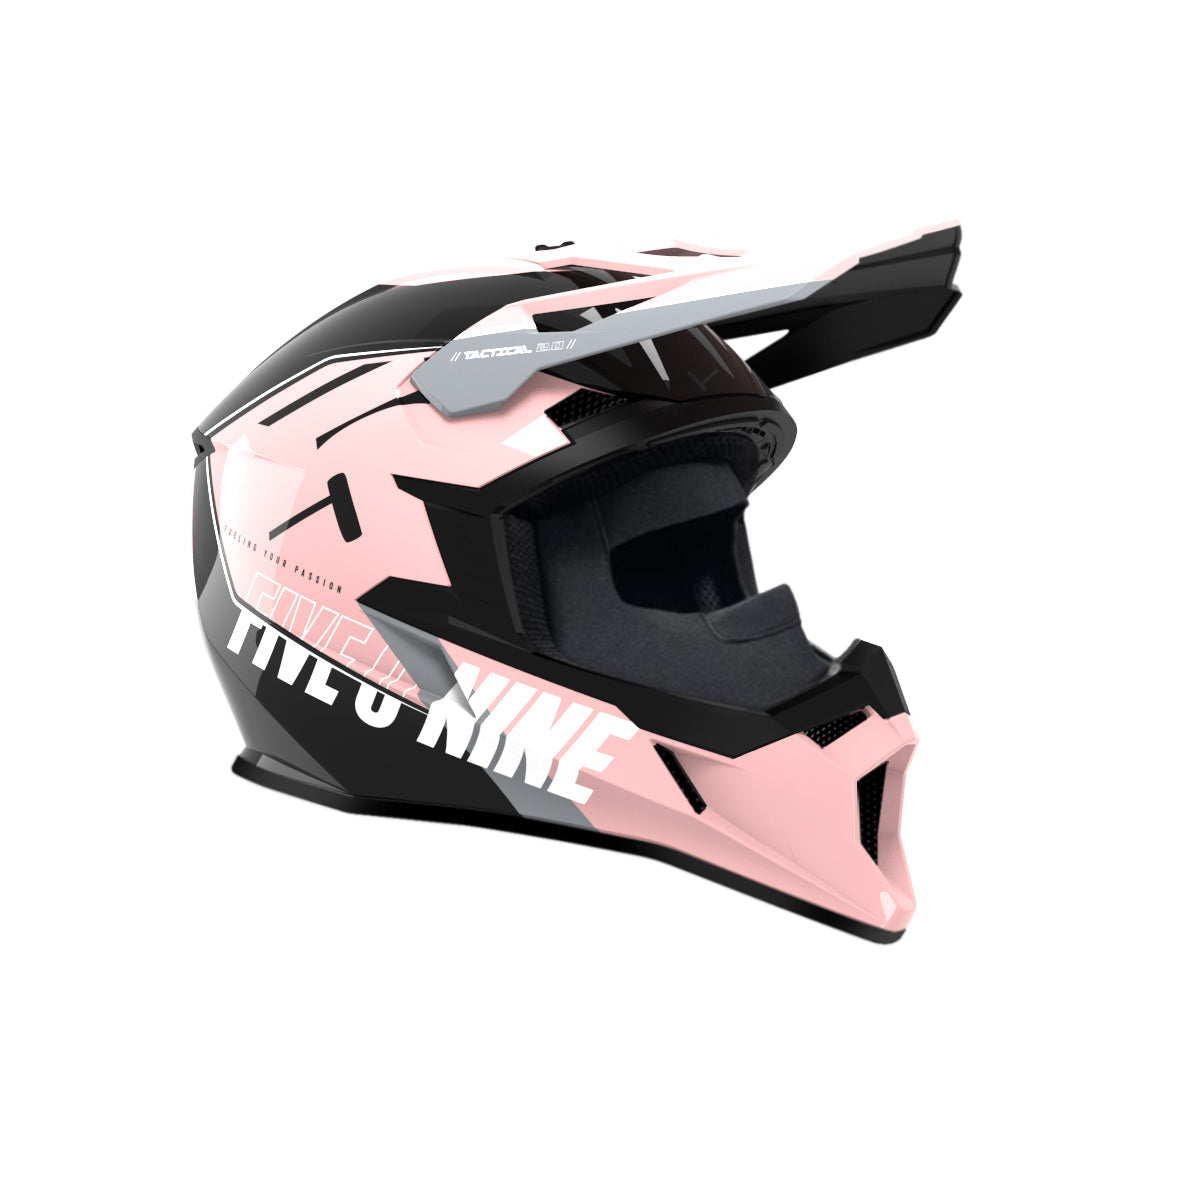 SALES SAMPLE: 509 Tactical 2.0 Helmet - Dusty Rose (Matte) XL